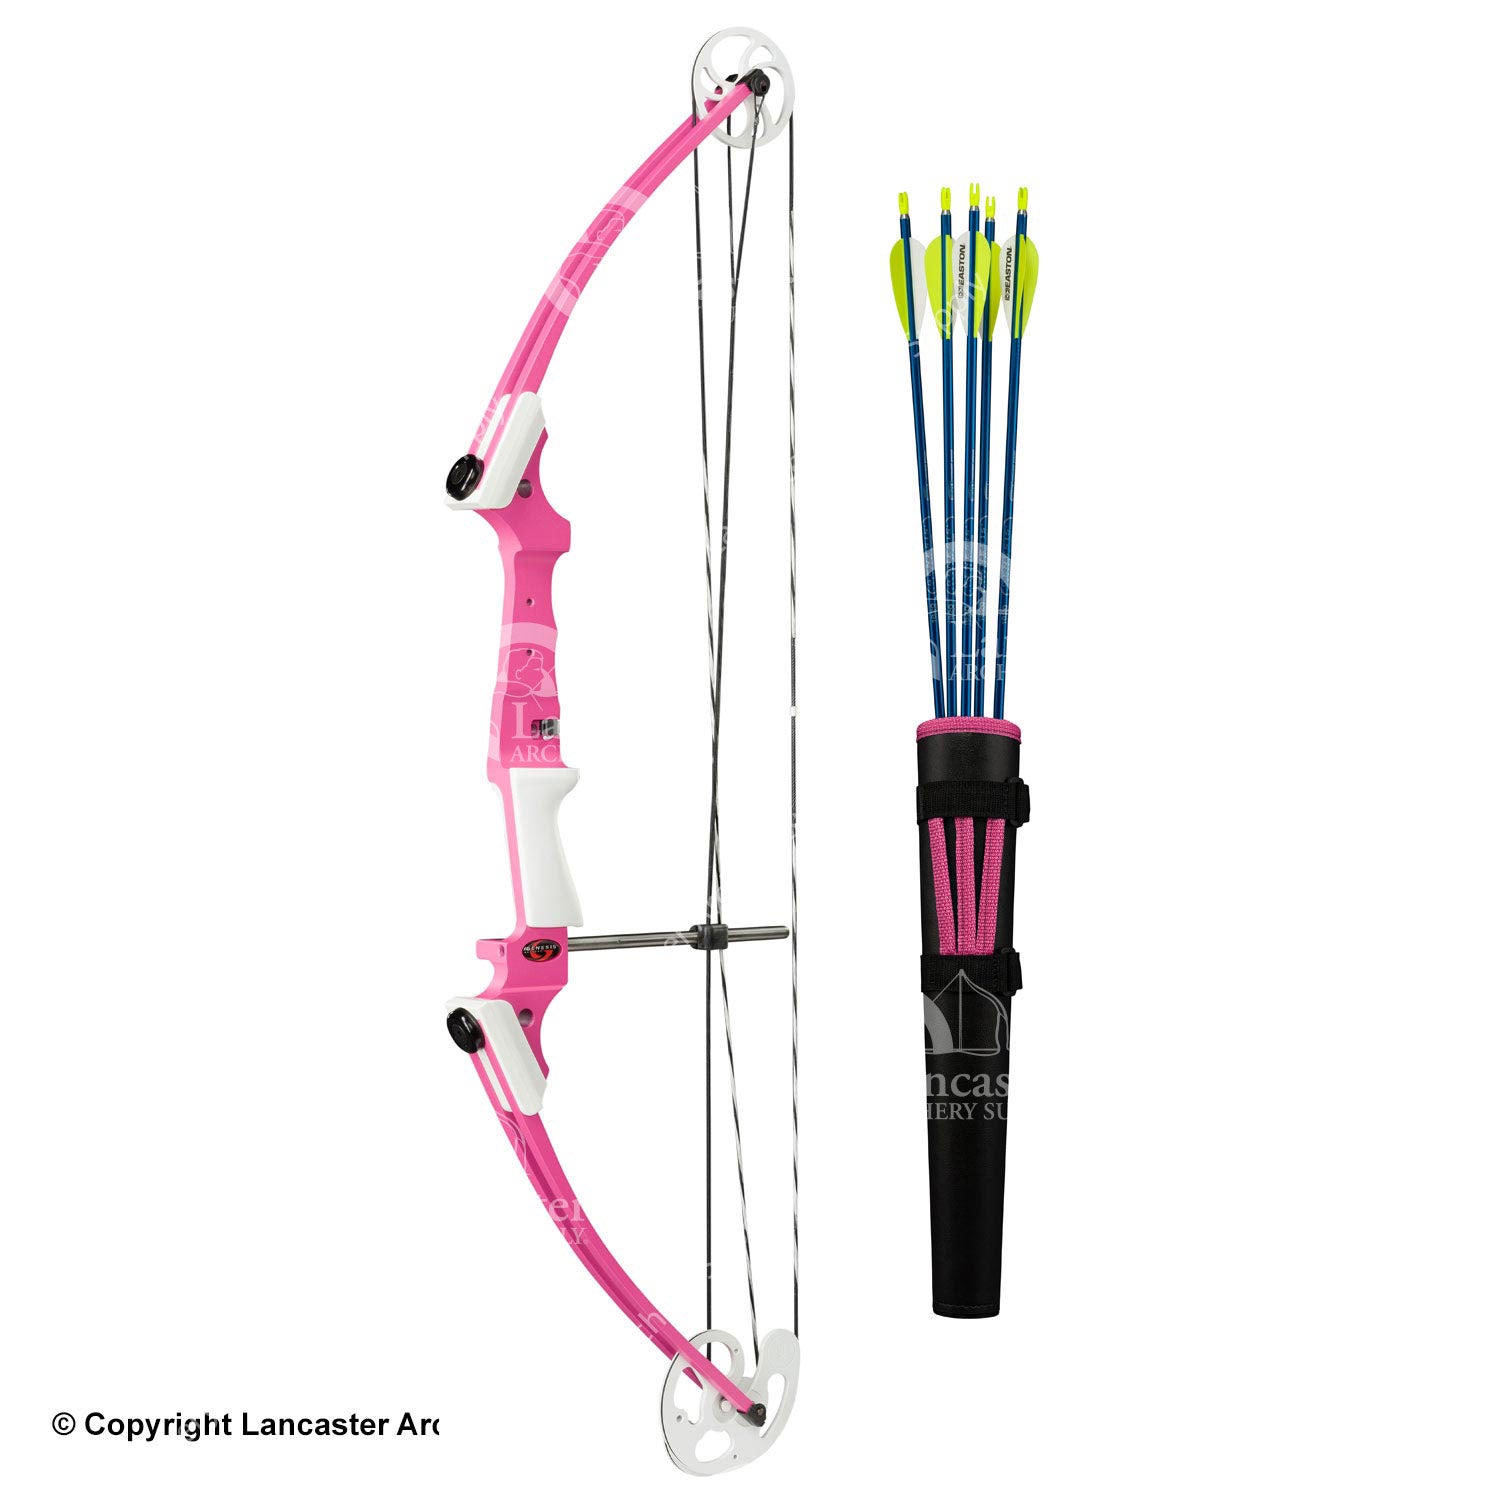 Genesis Archery Original Genesis Bow Kit (Pink)